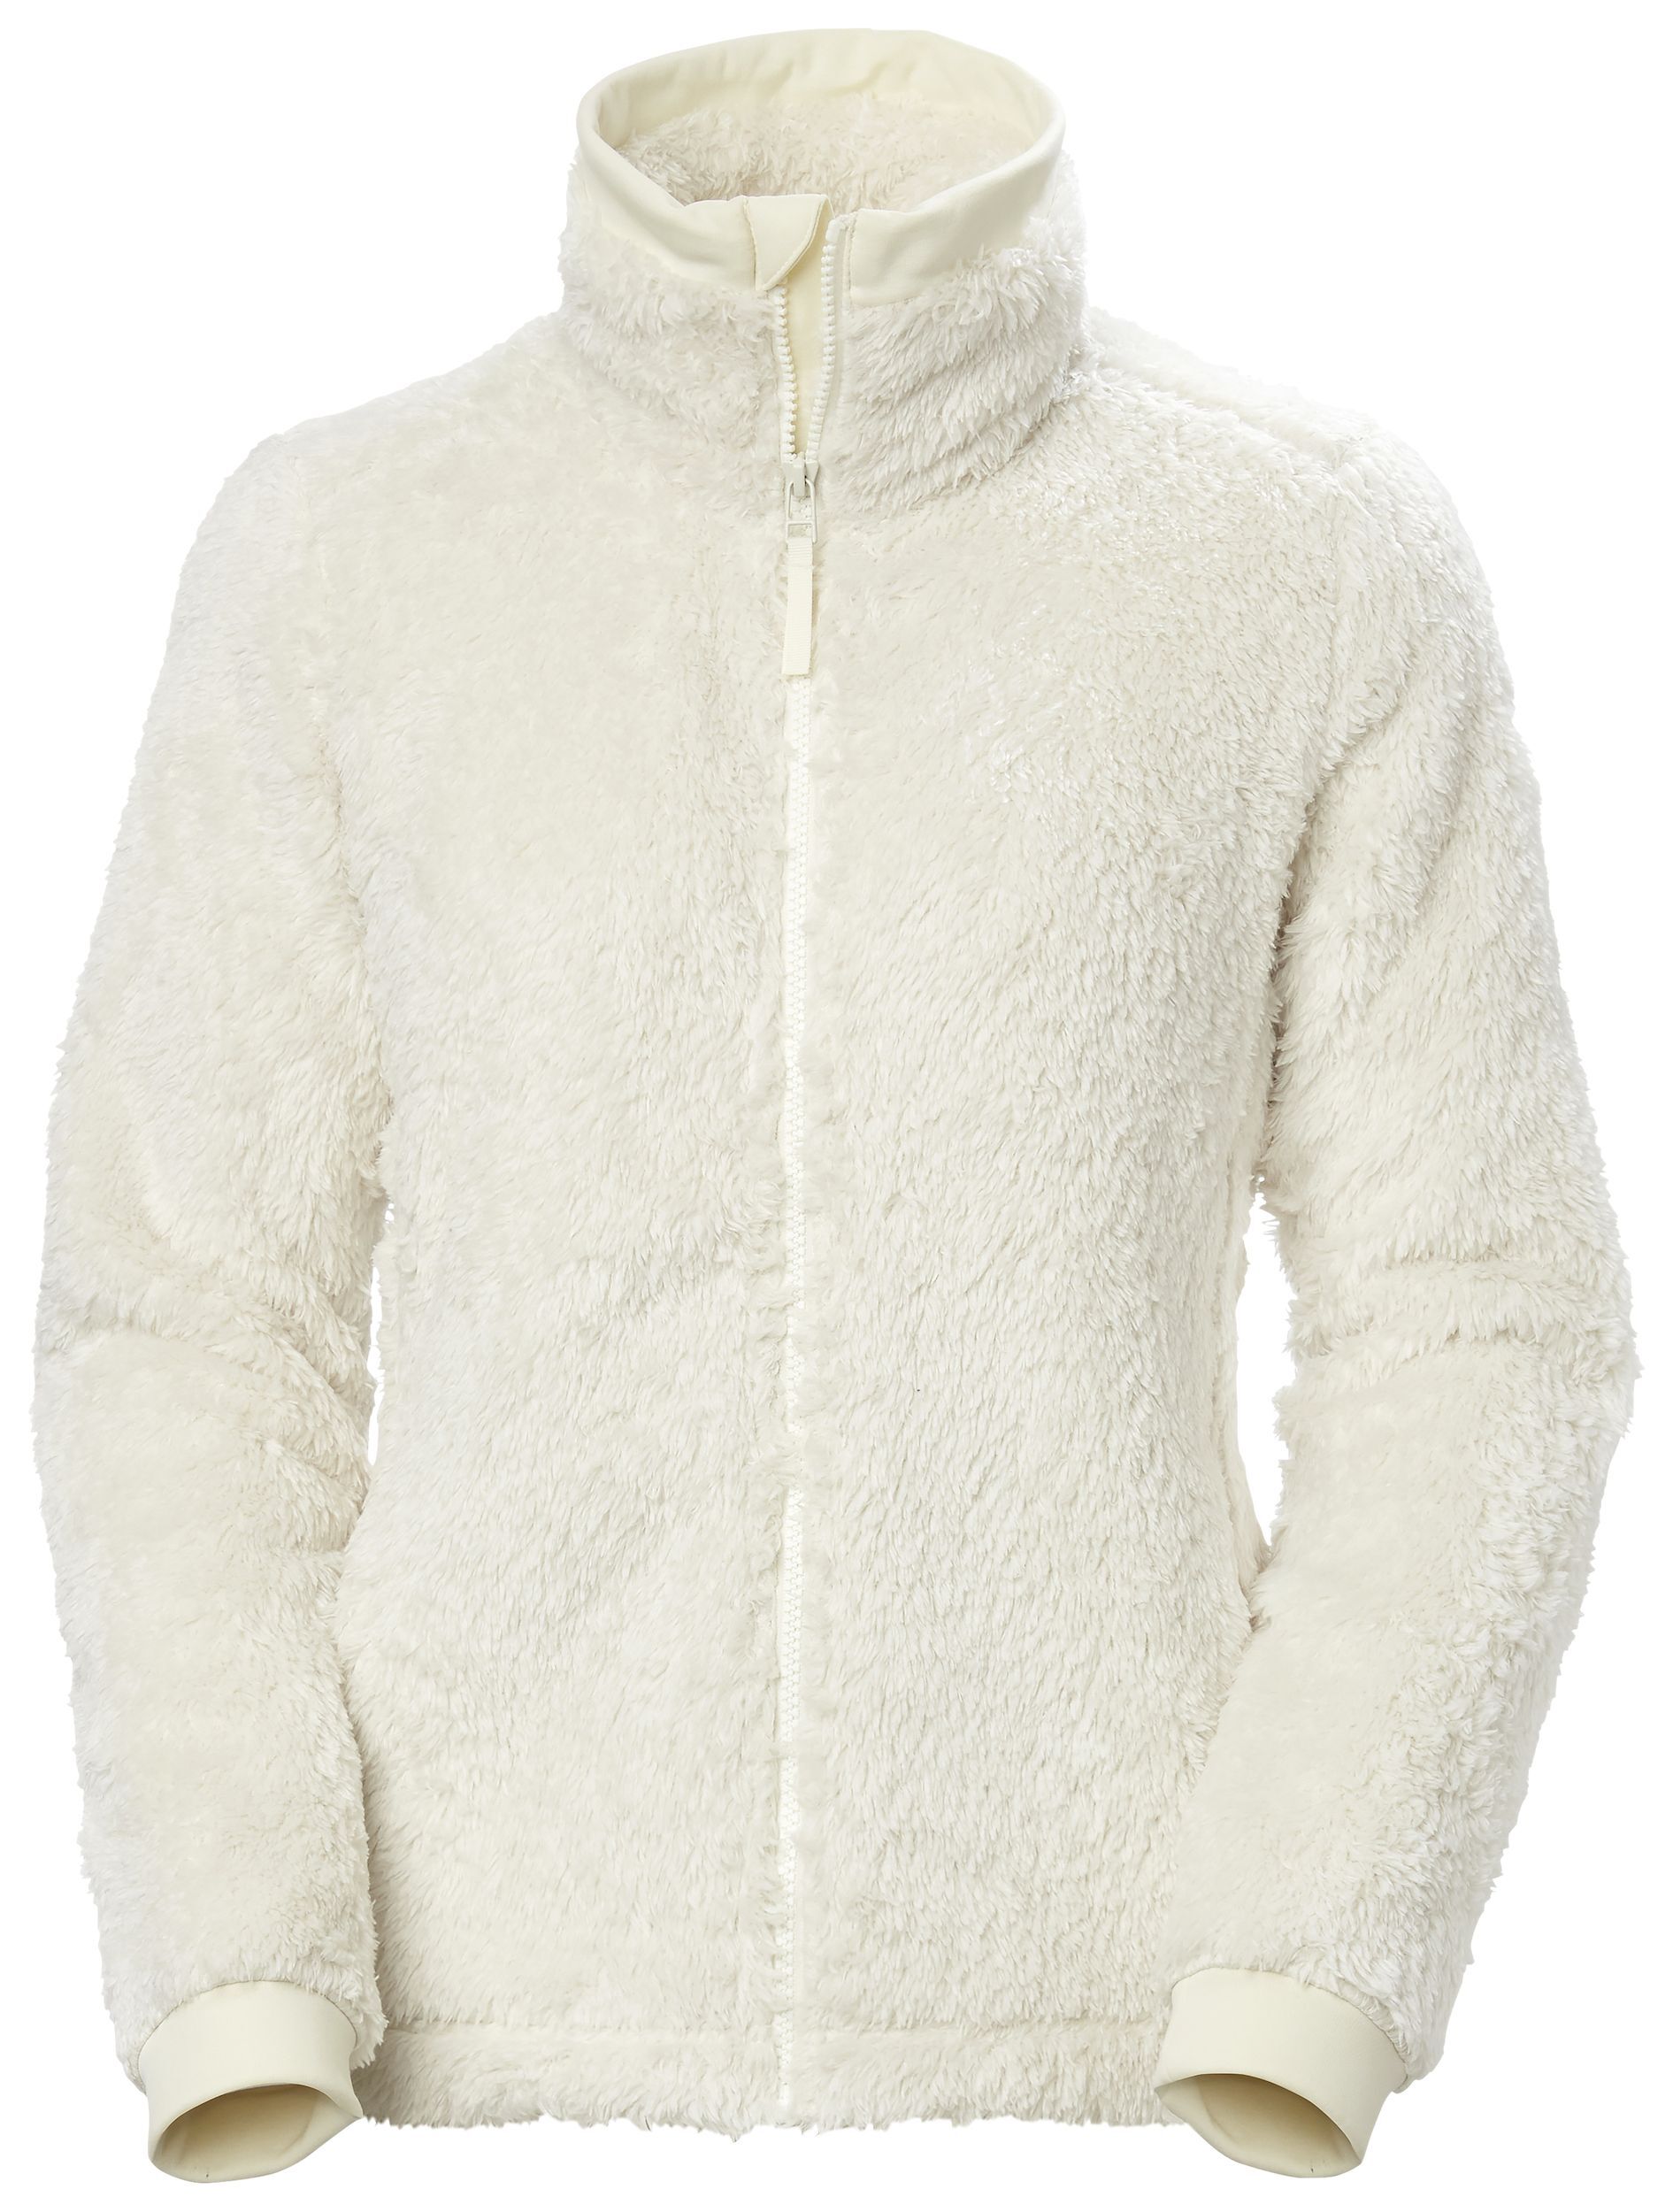 Helly Hansen Precious Fleece Jacket 2.0 - Fleecetröjor - Dam